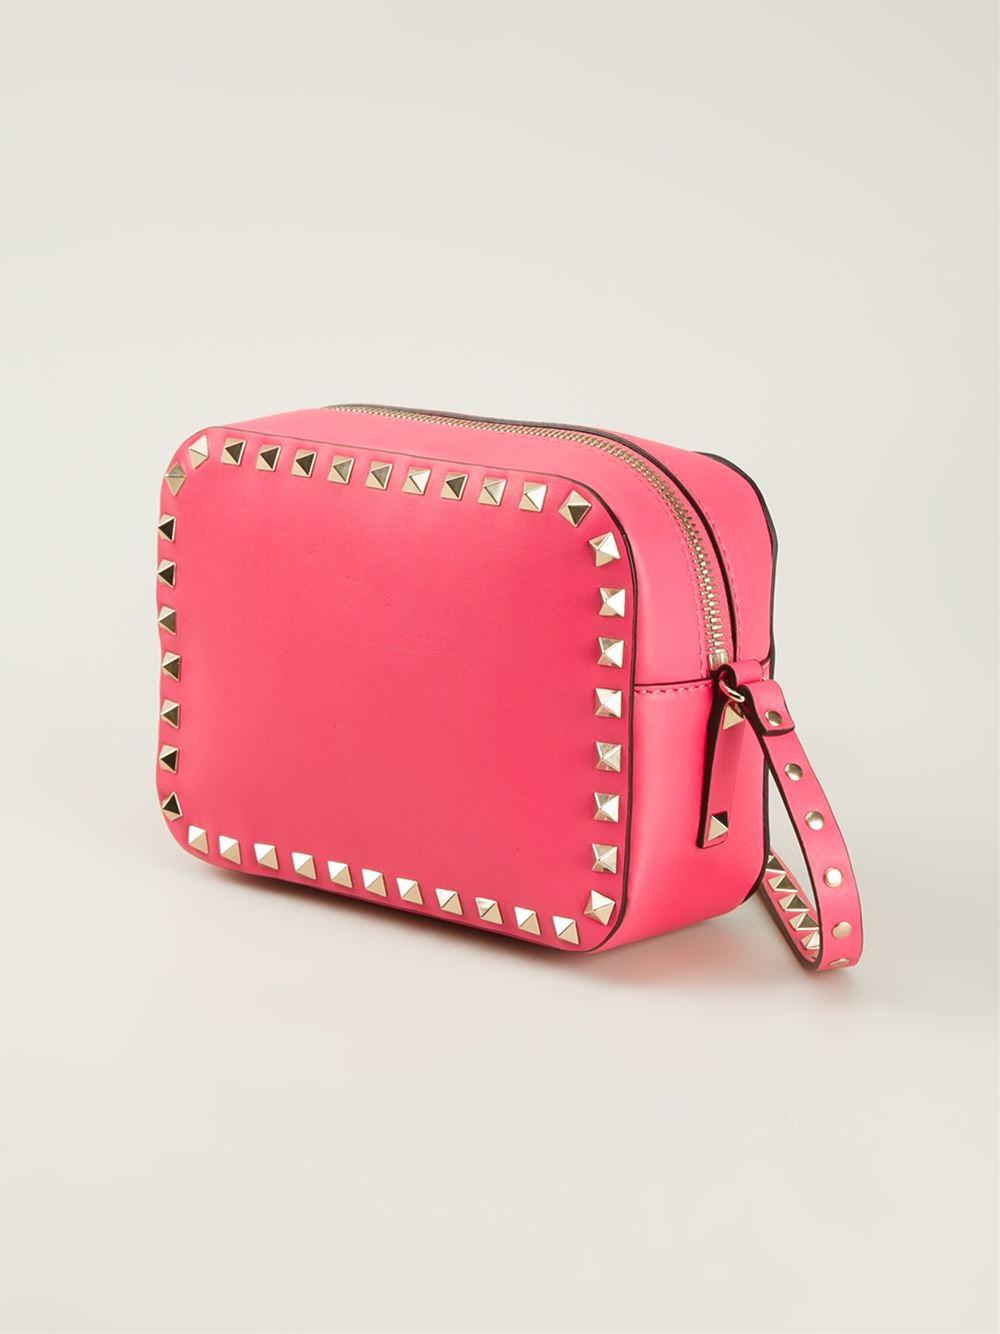 Lyst - Valentino Rockstud Cross Body Bag in Pink